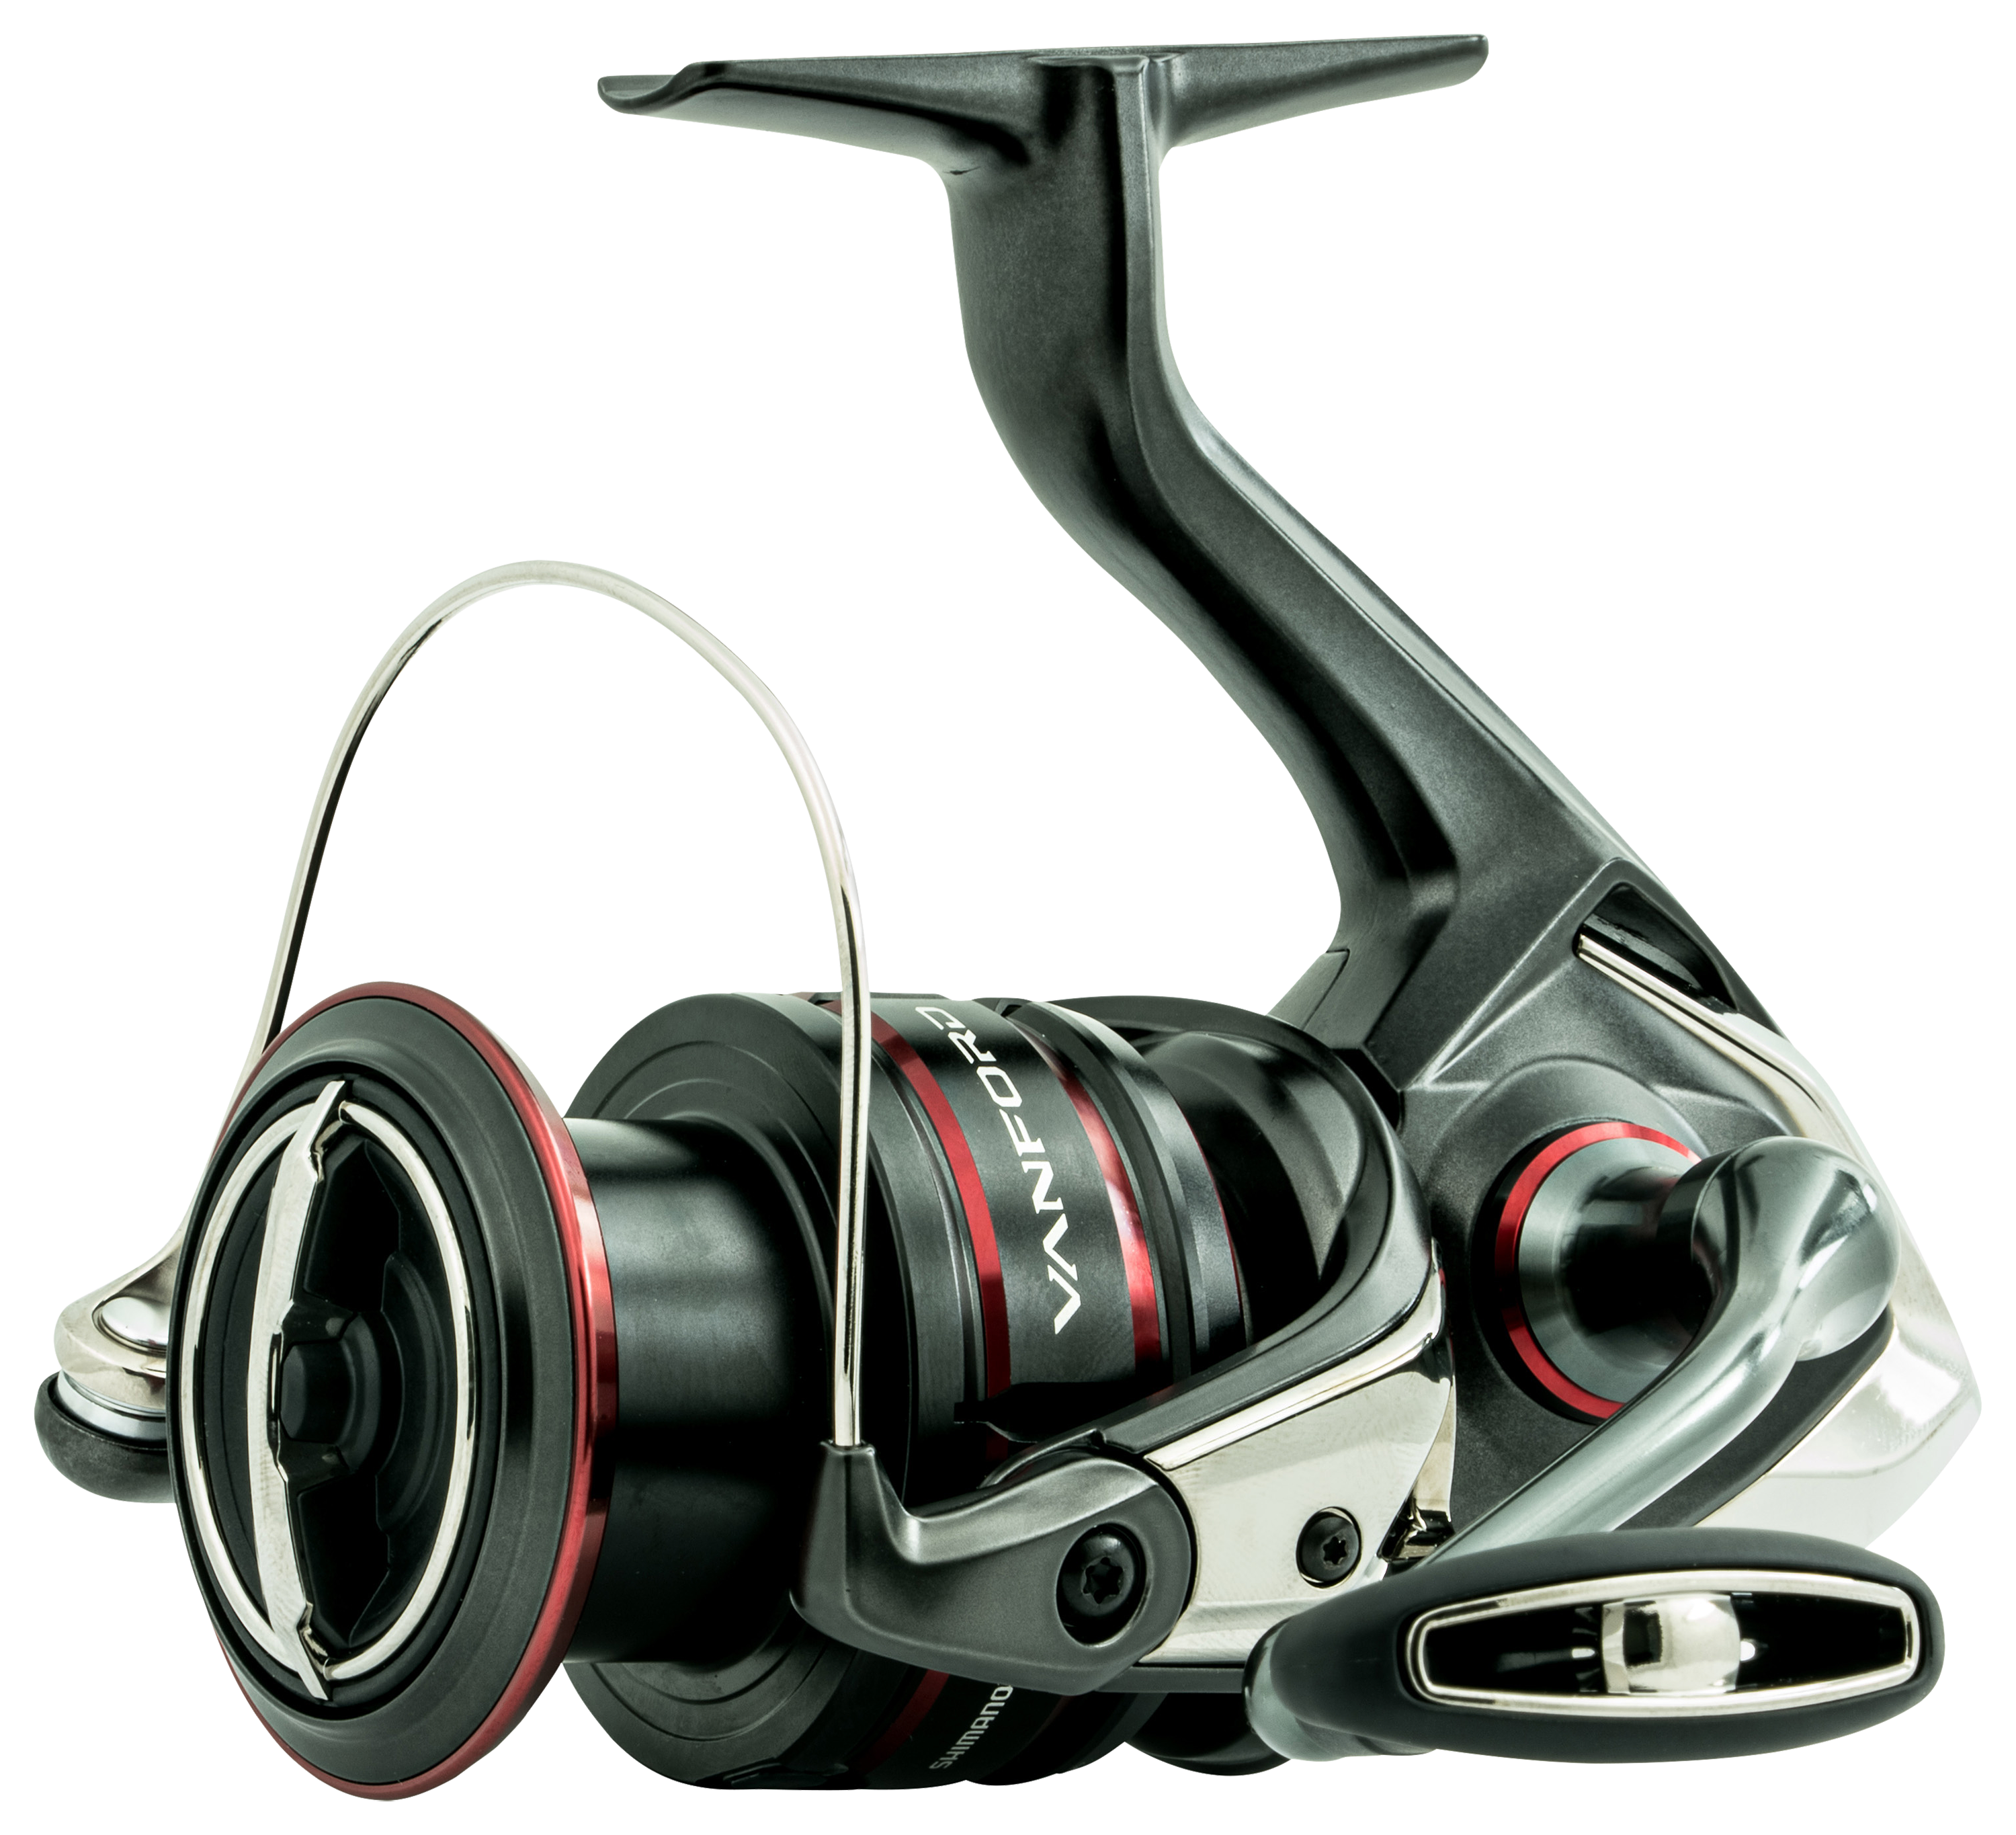 Shimano 21 NASCI 1000 Spinning Reel HAGANE Silent drive Fishing gear Outdoor